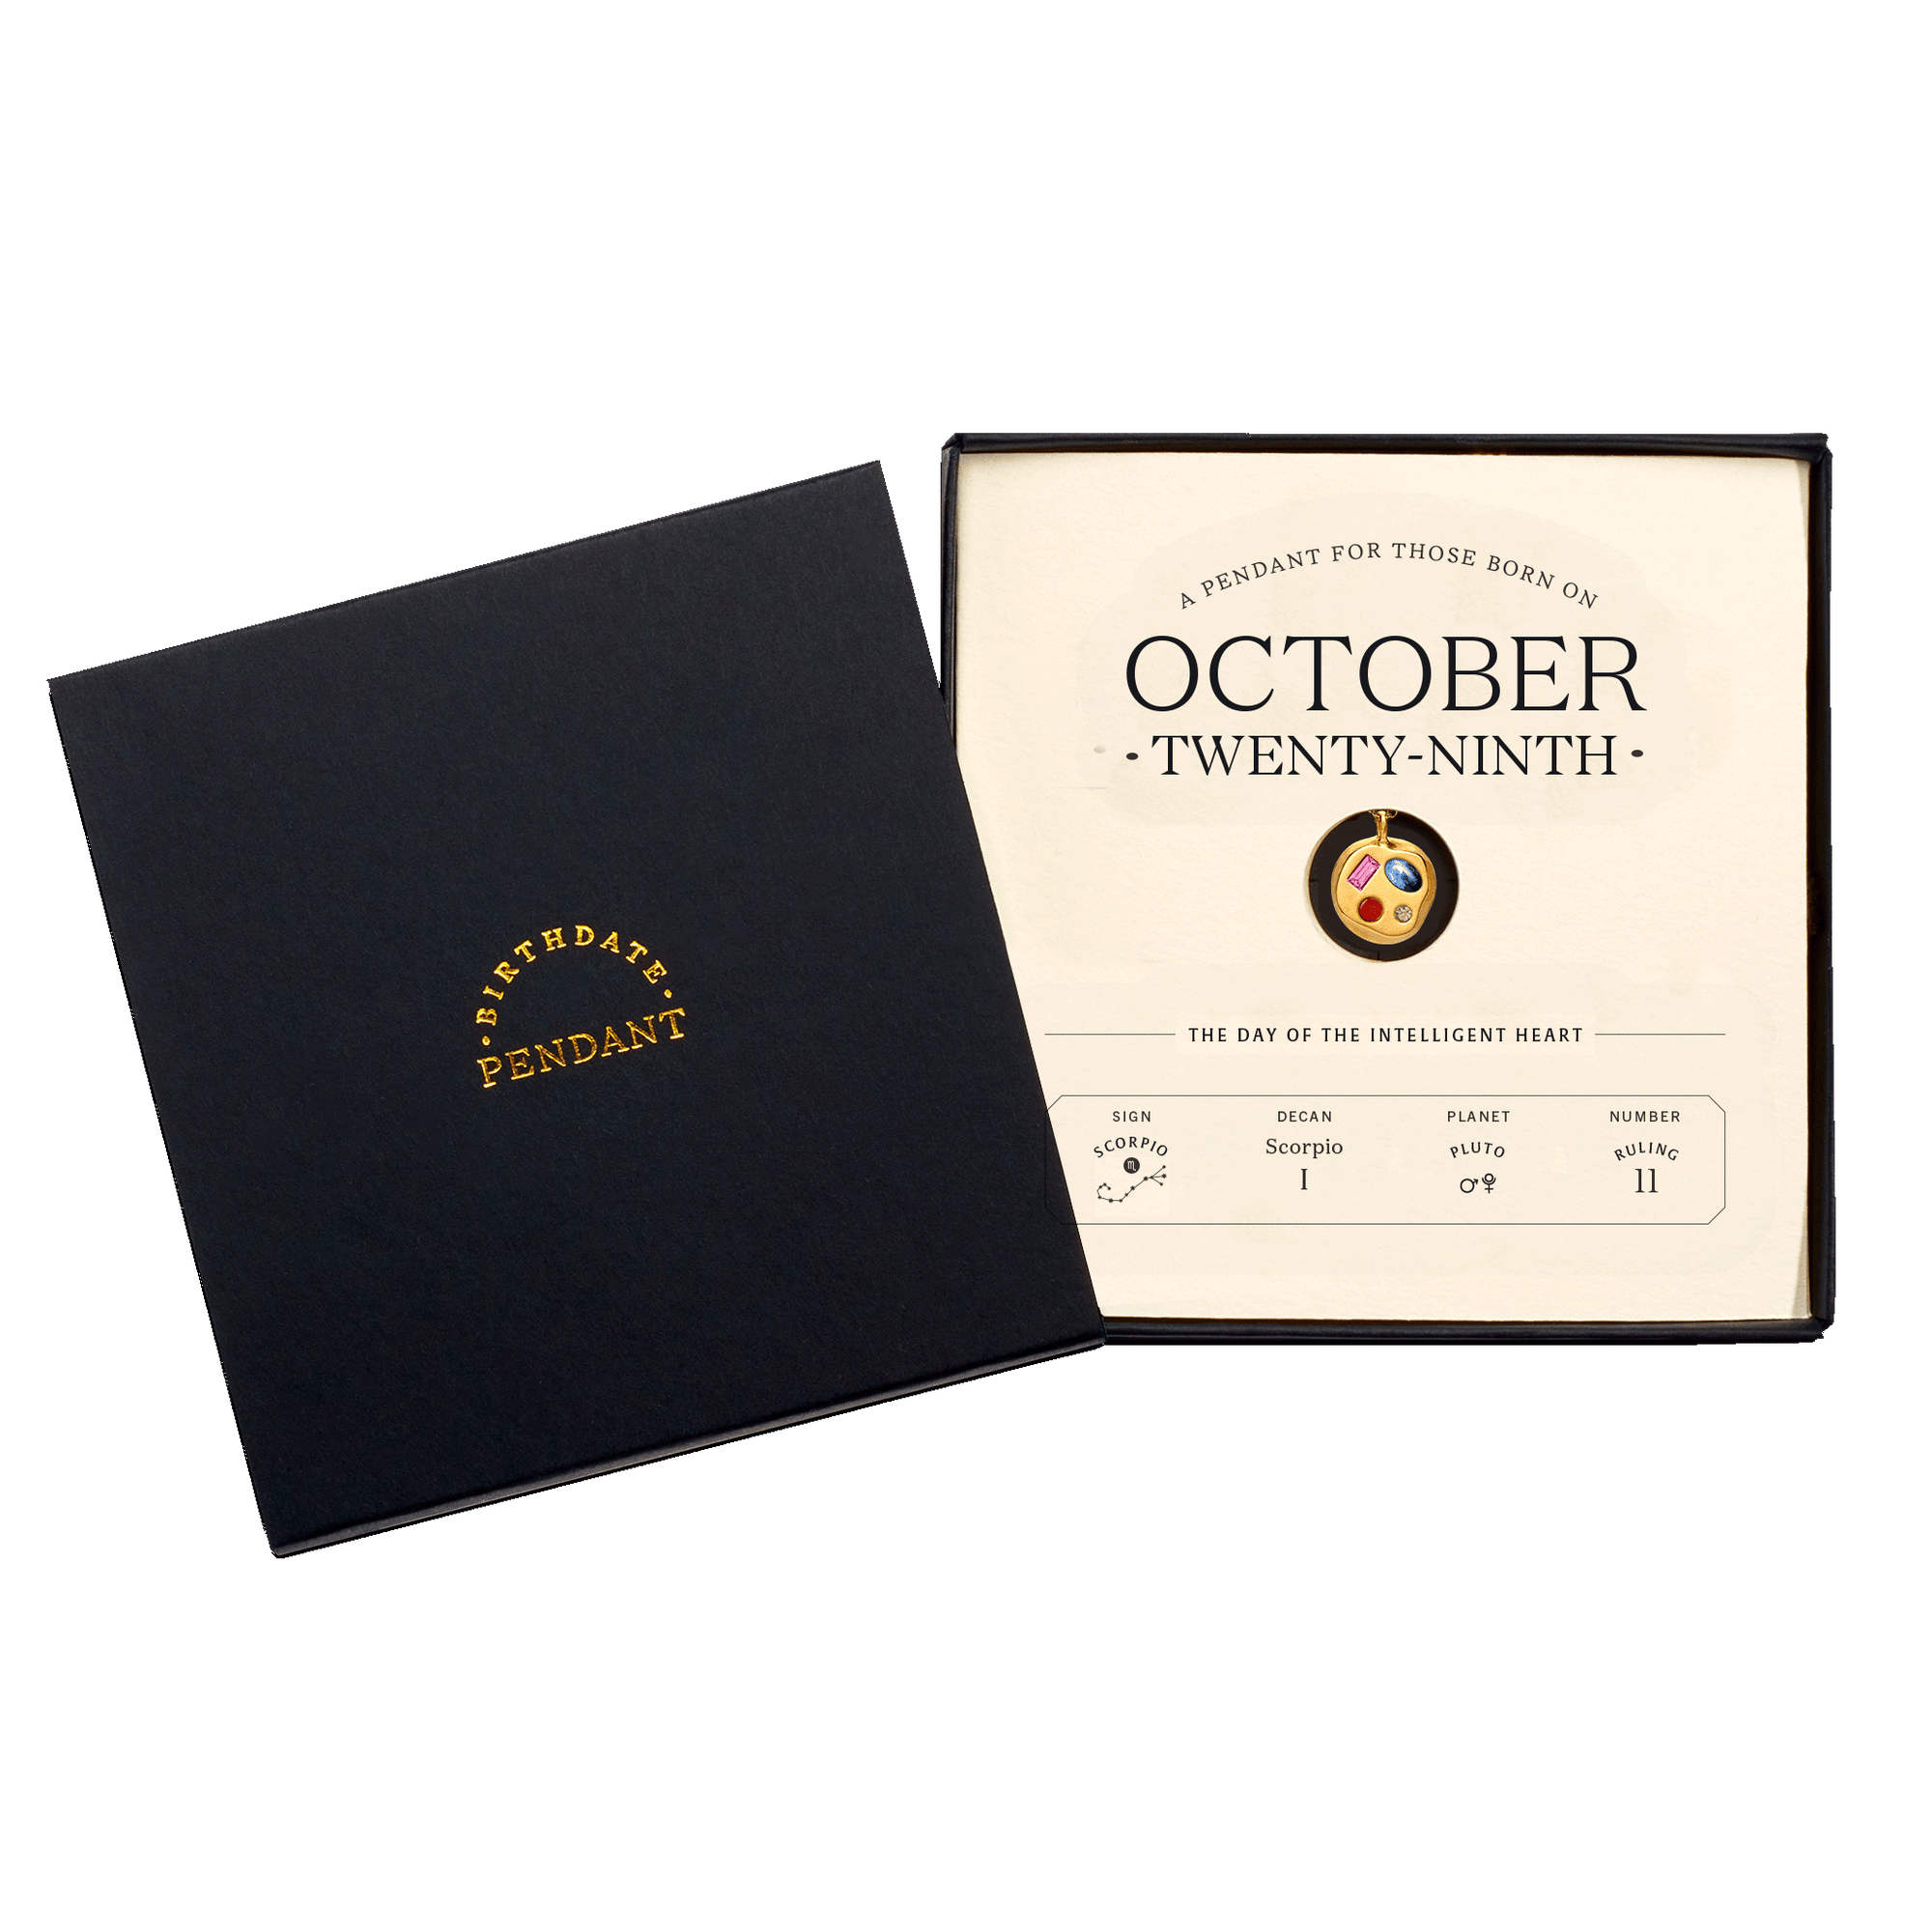 The October Twenty-Ninth Pendant inside its box